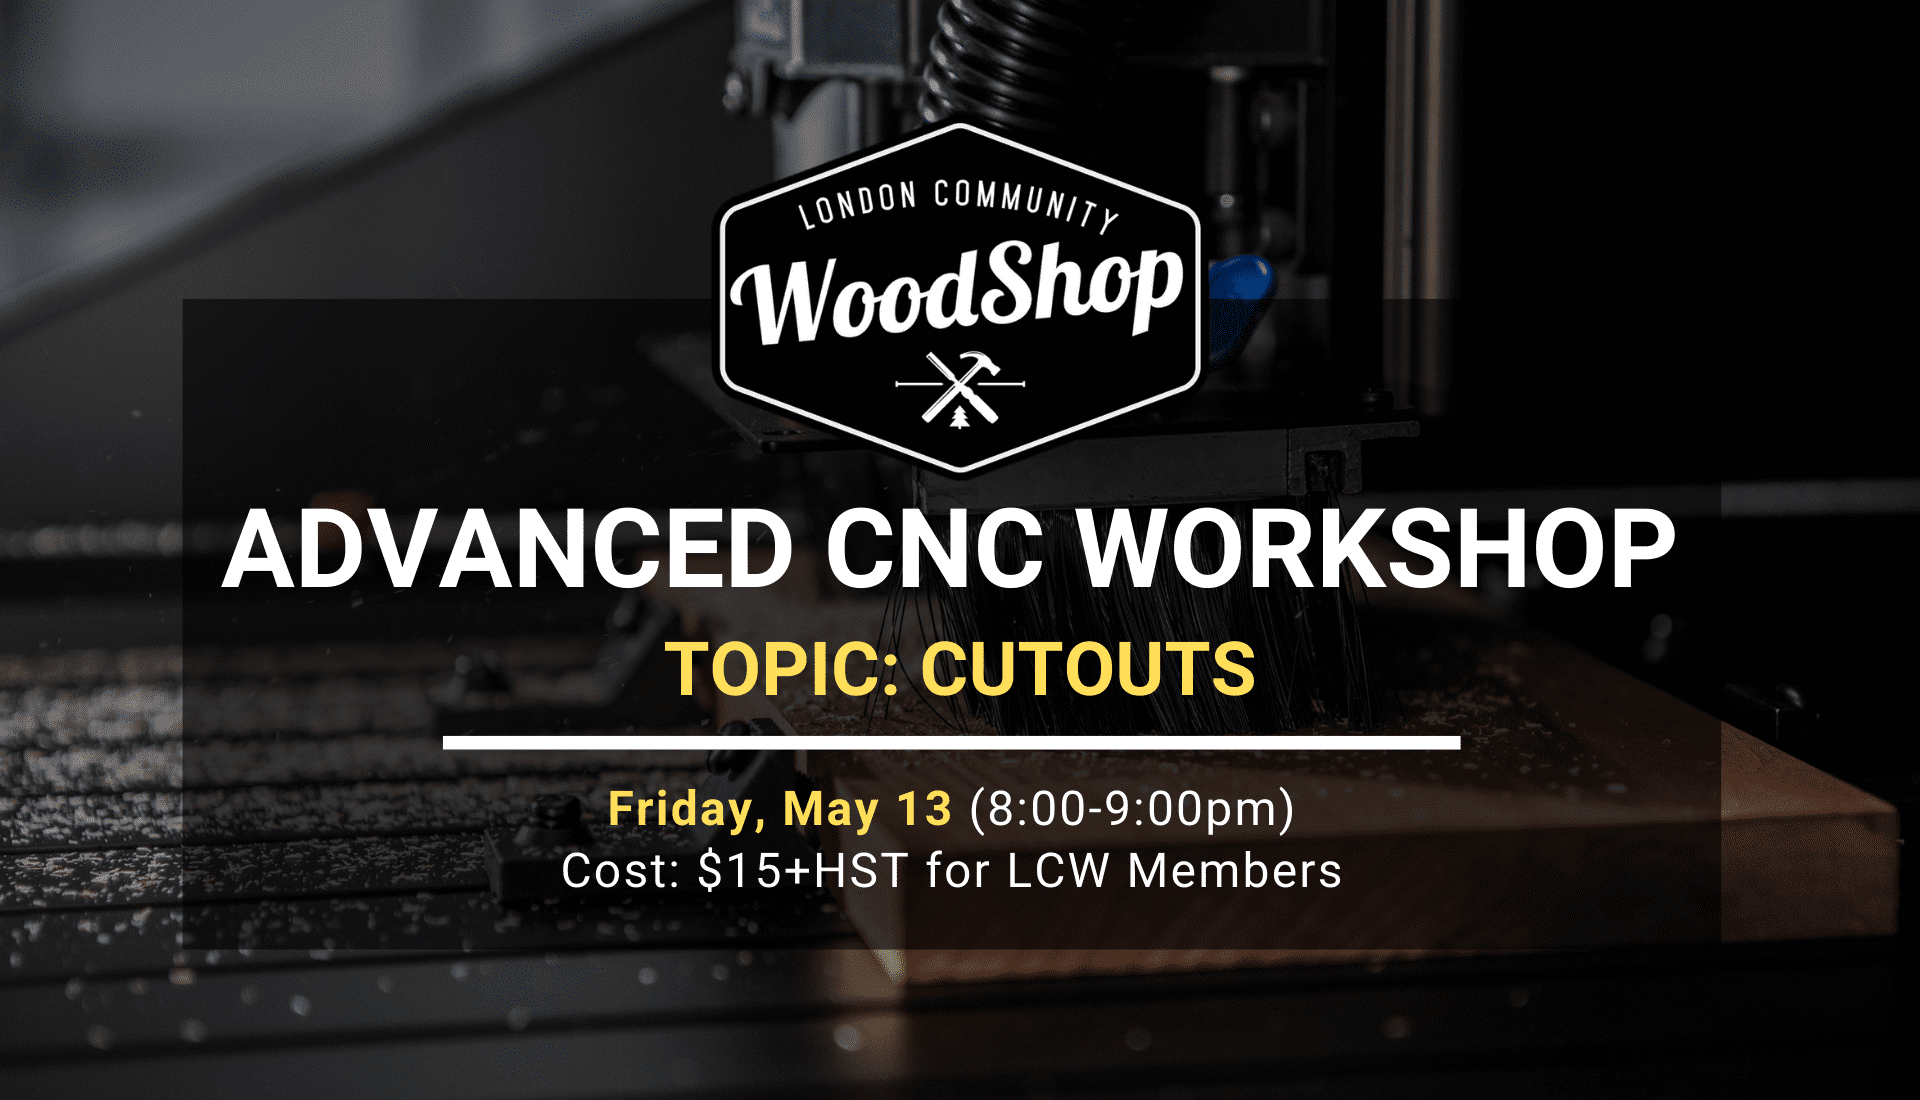 Advanced CNC Workshop Cutouts (May 13)